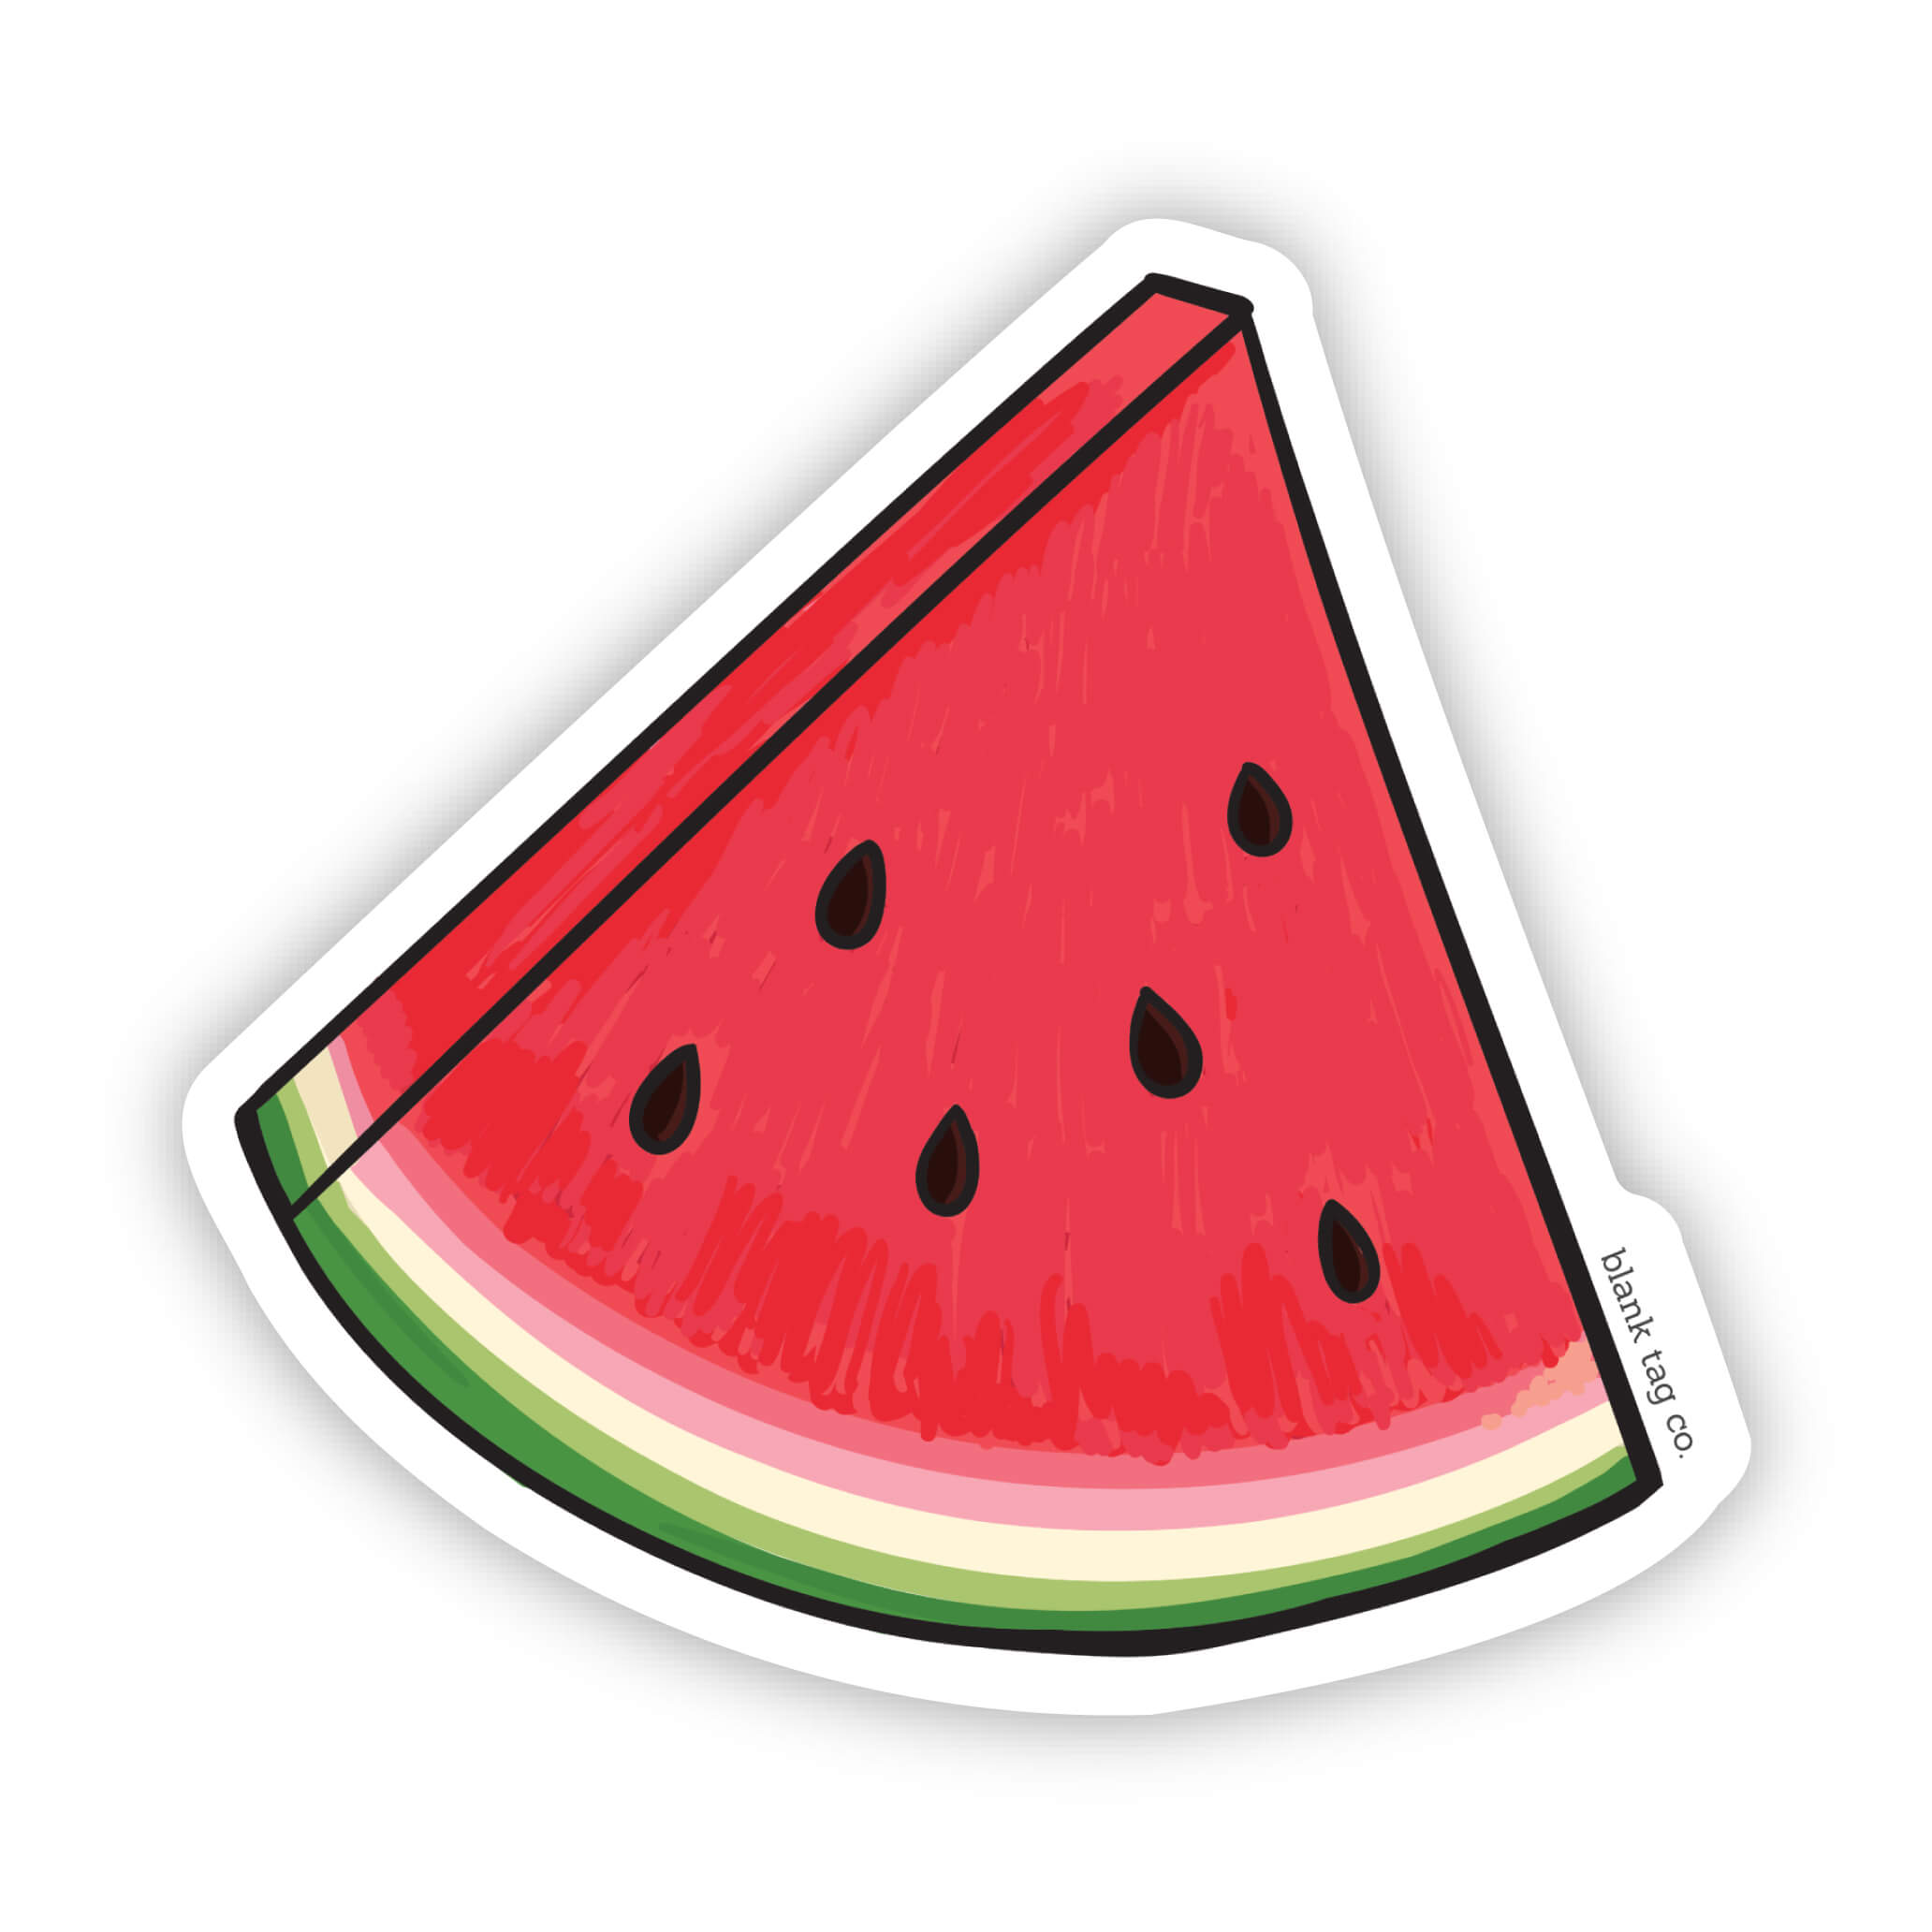 The Watermelon Sticker